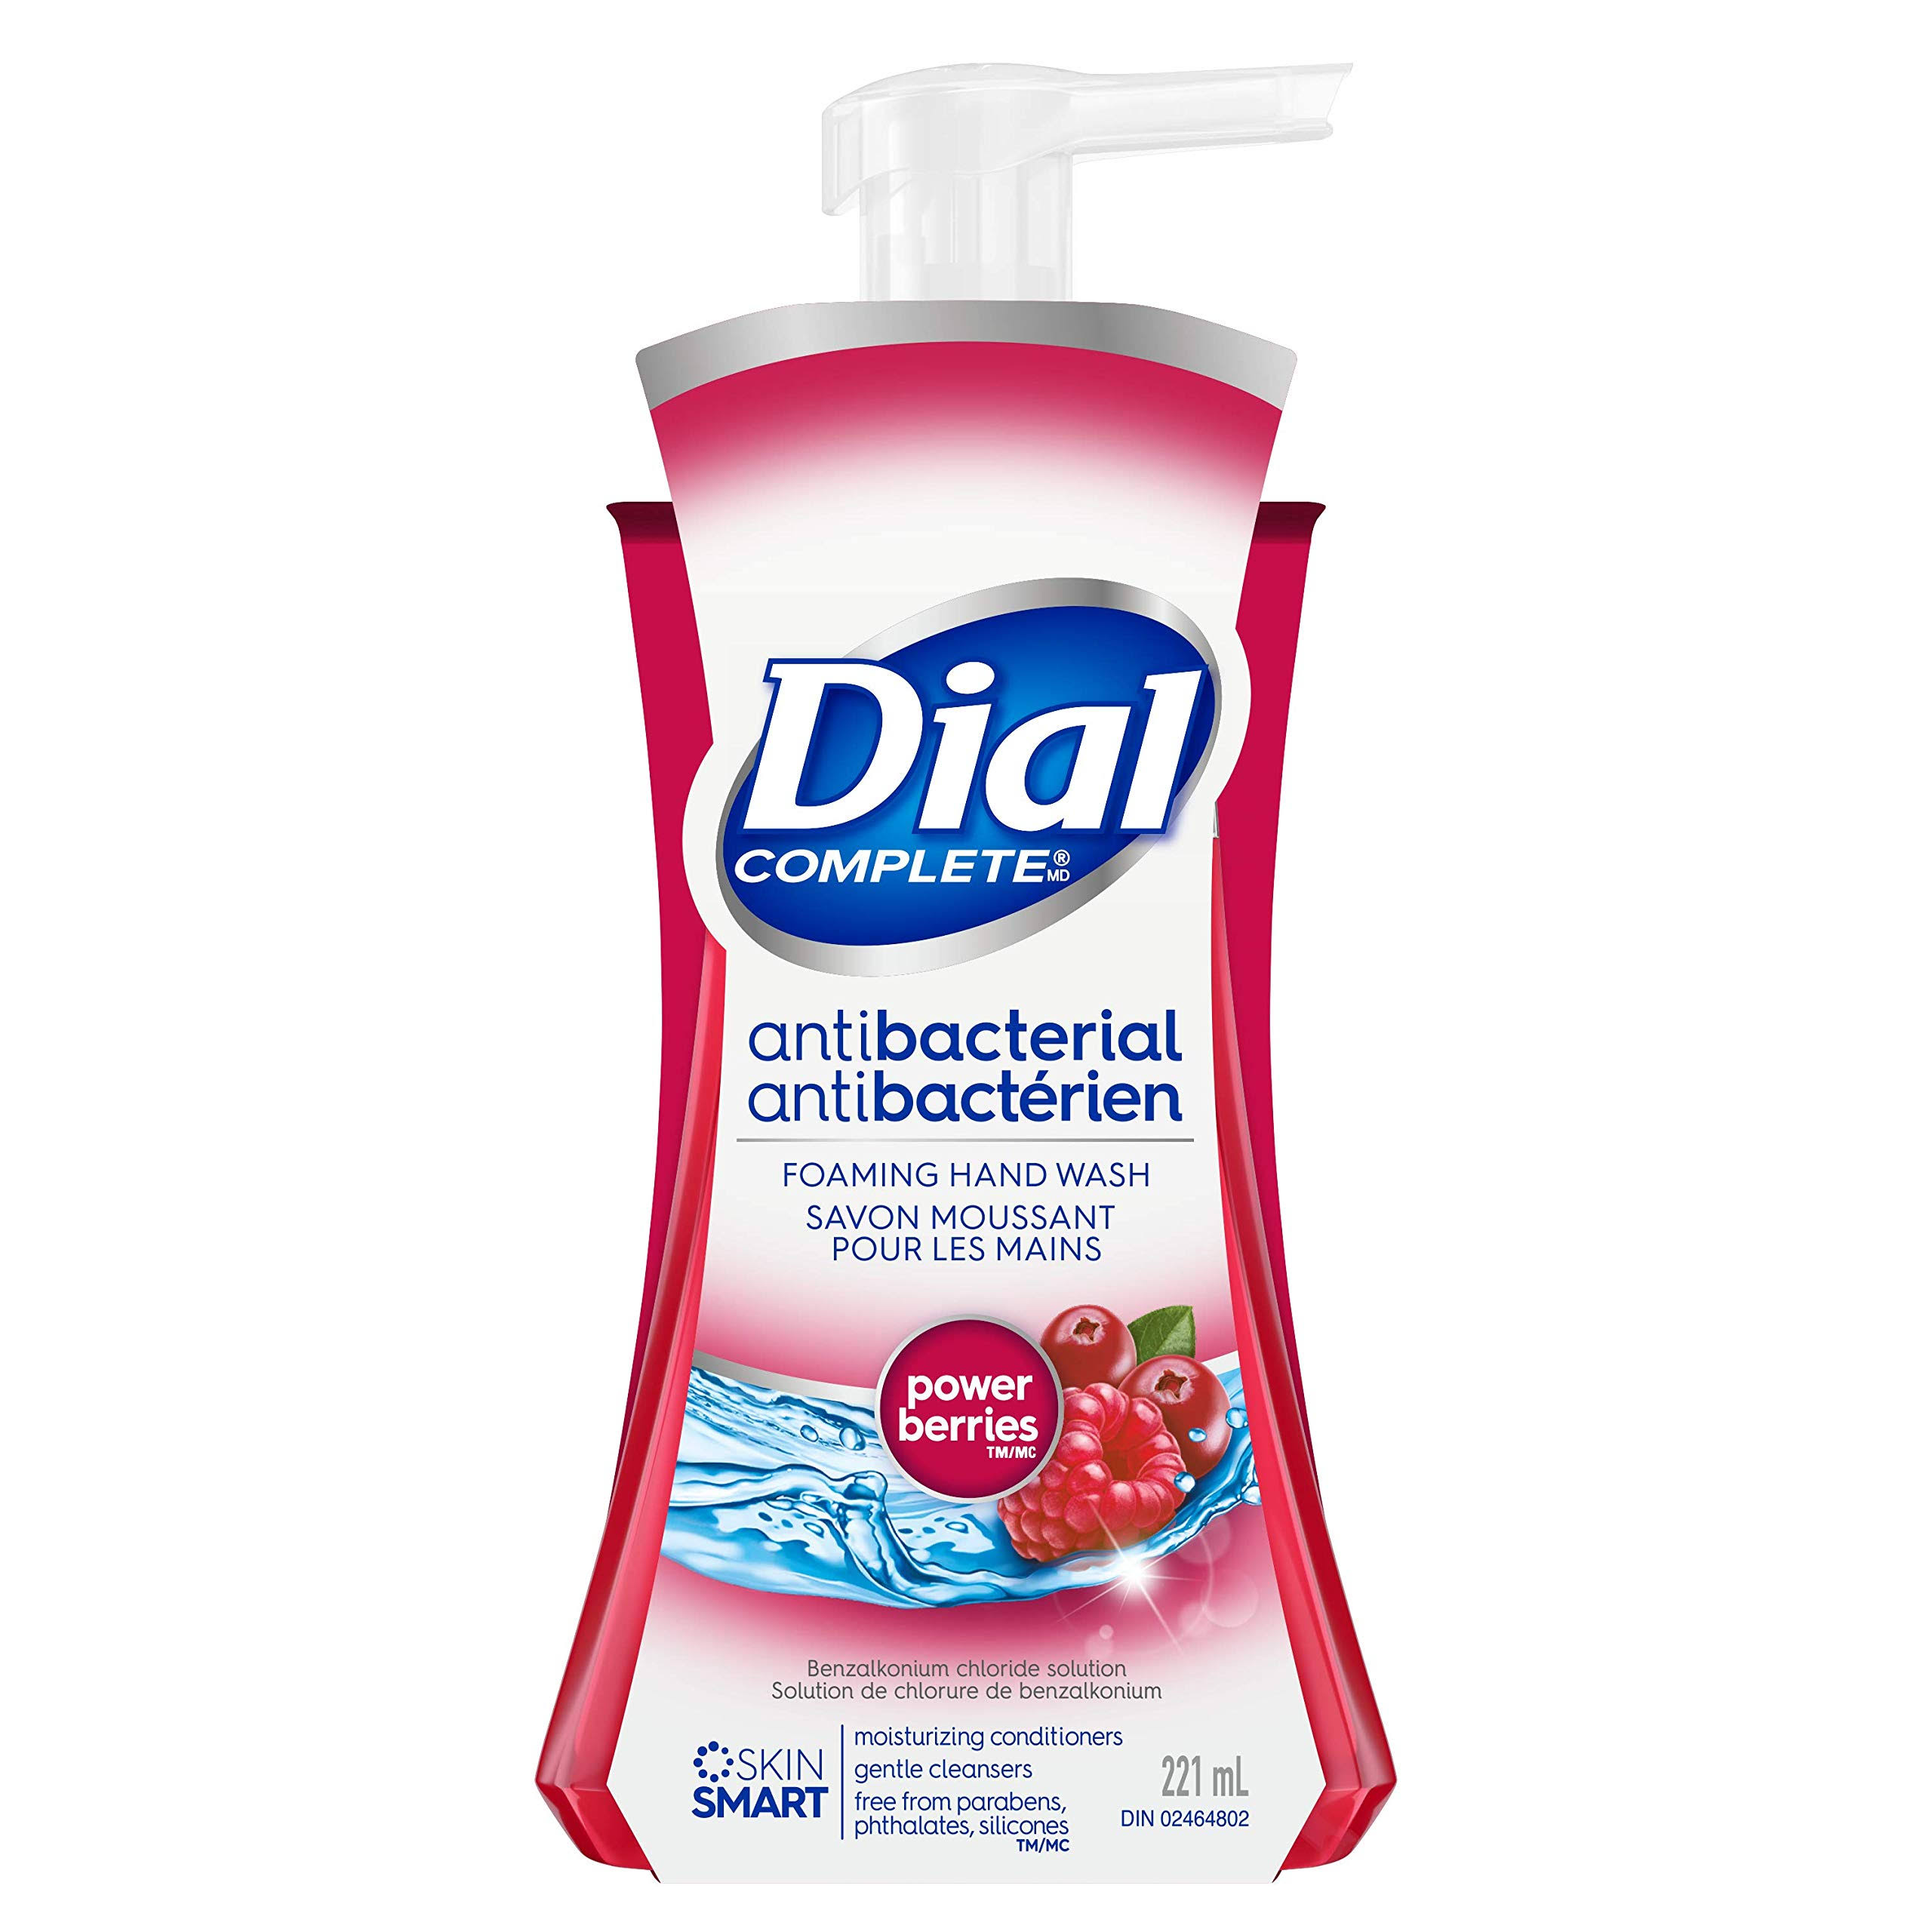 Dial Complete Antibacterial Foaming Hand Wash - Power Berries, 221ml